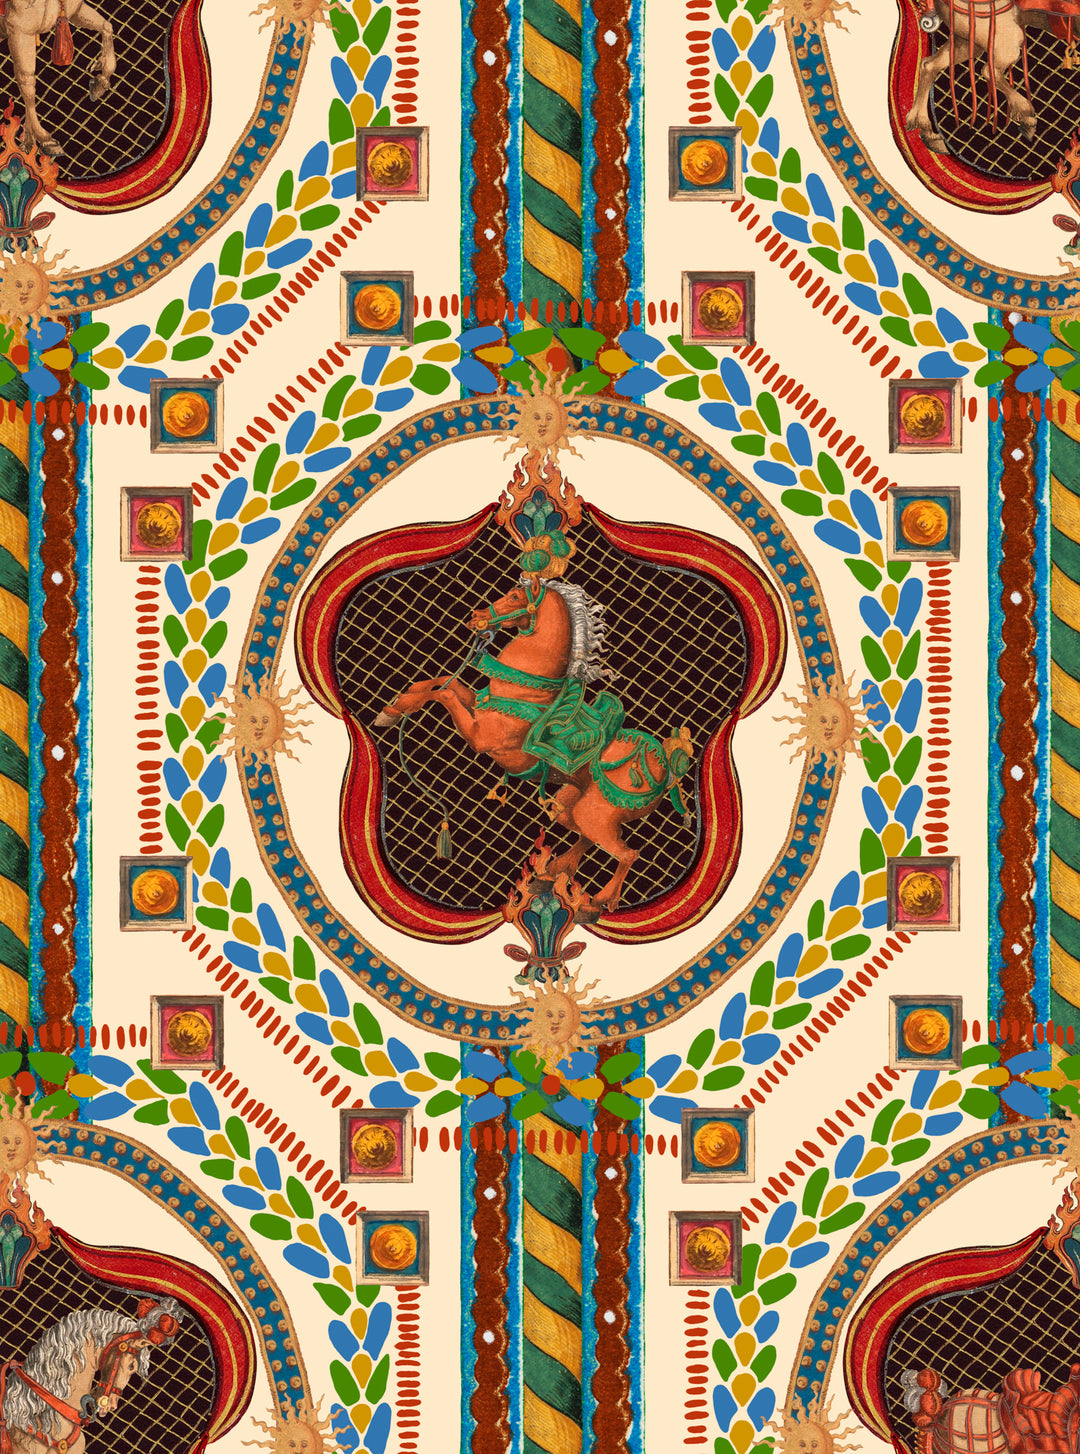 Mind-The-gap-Venetian-ornament-wallpaper-carnival-inspired-merry-go-round-Carousel-ornate-sun-motif-circus-theme-cream-WP20769